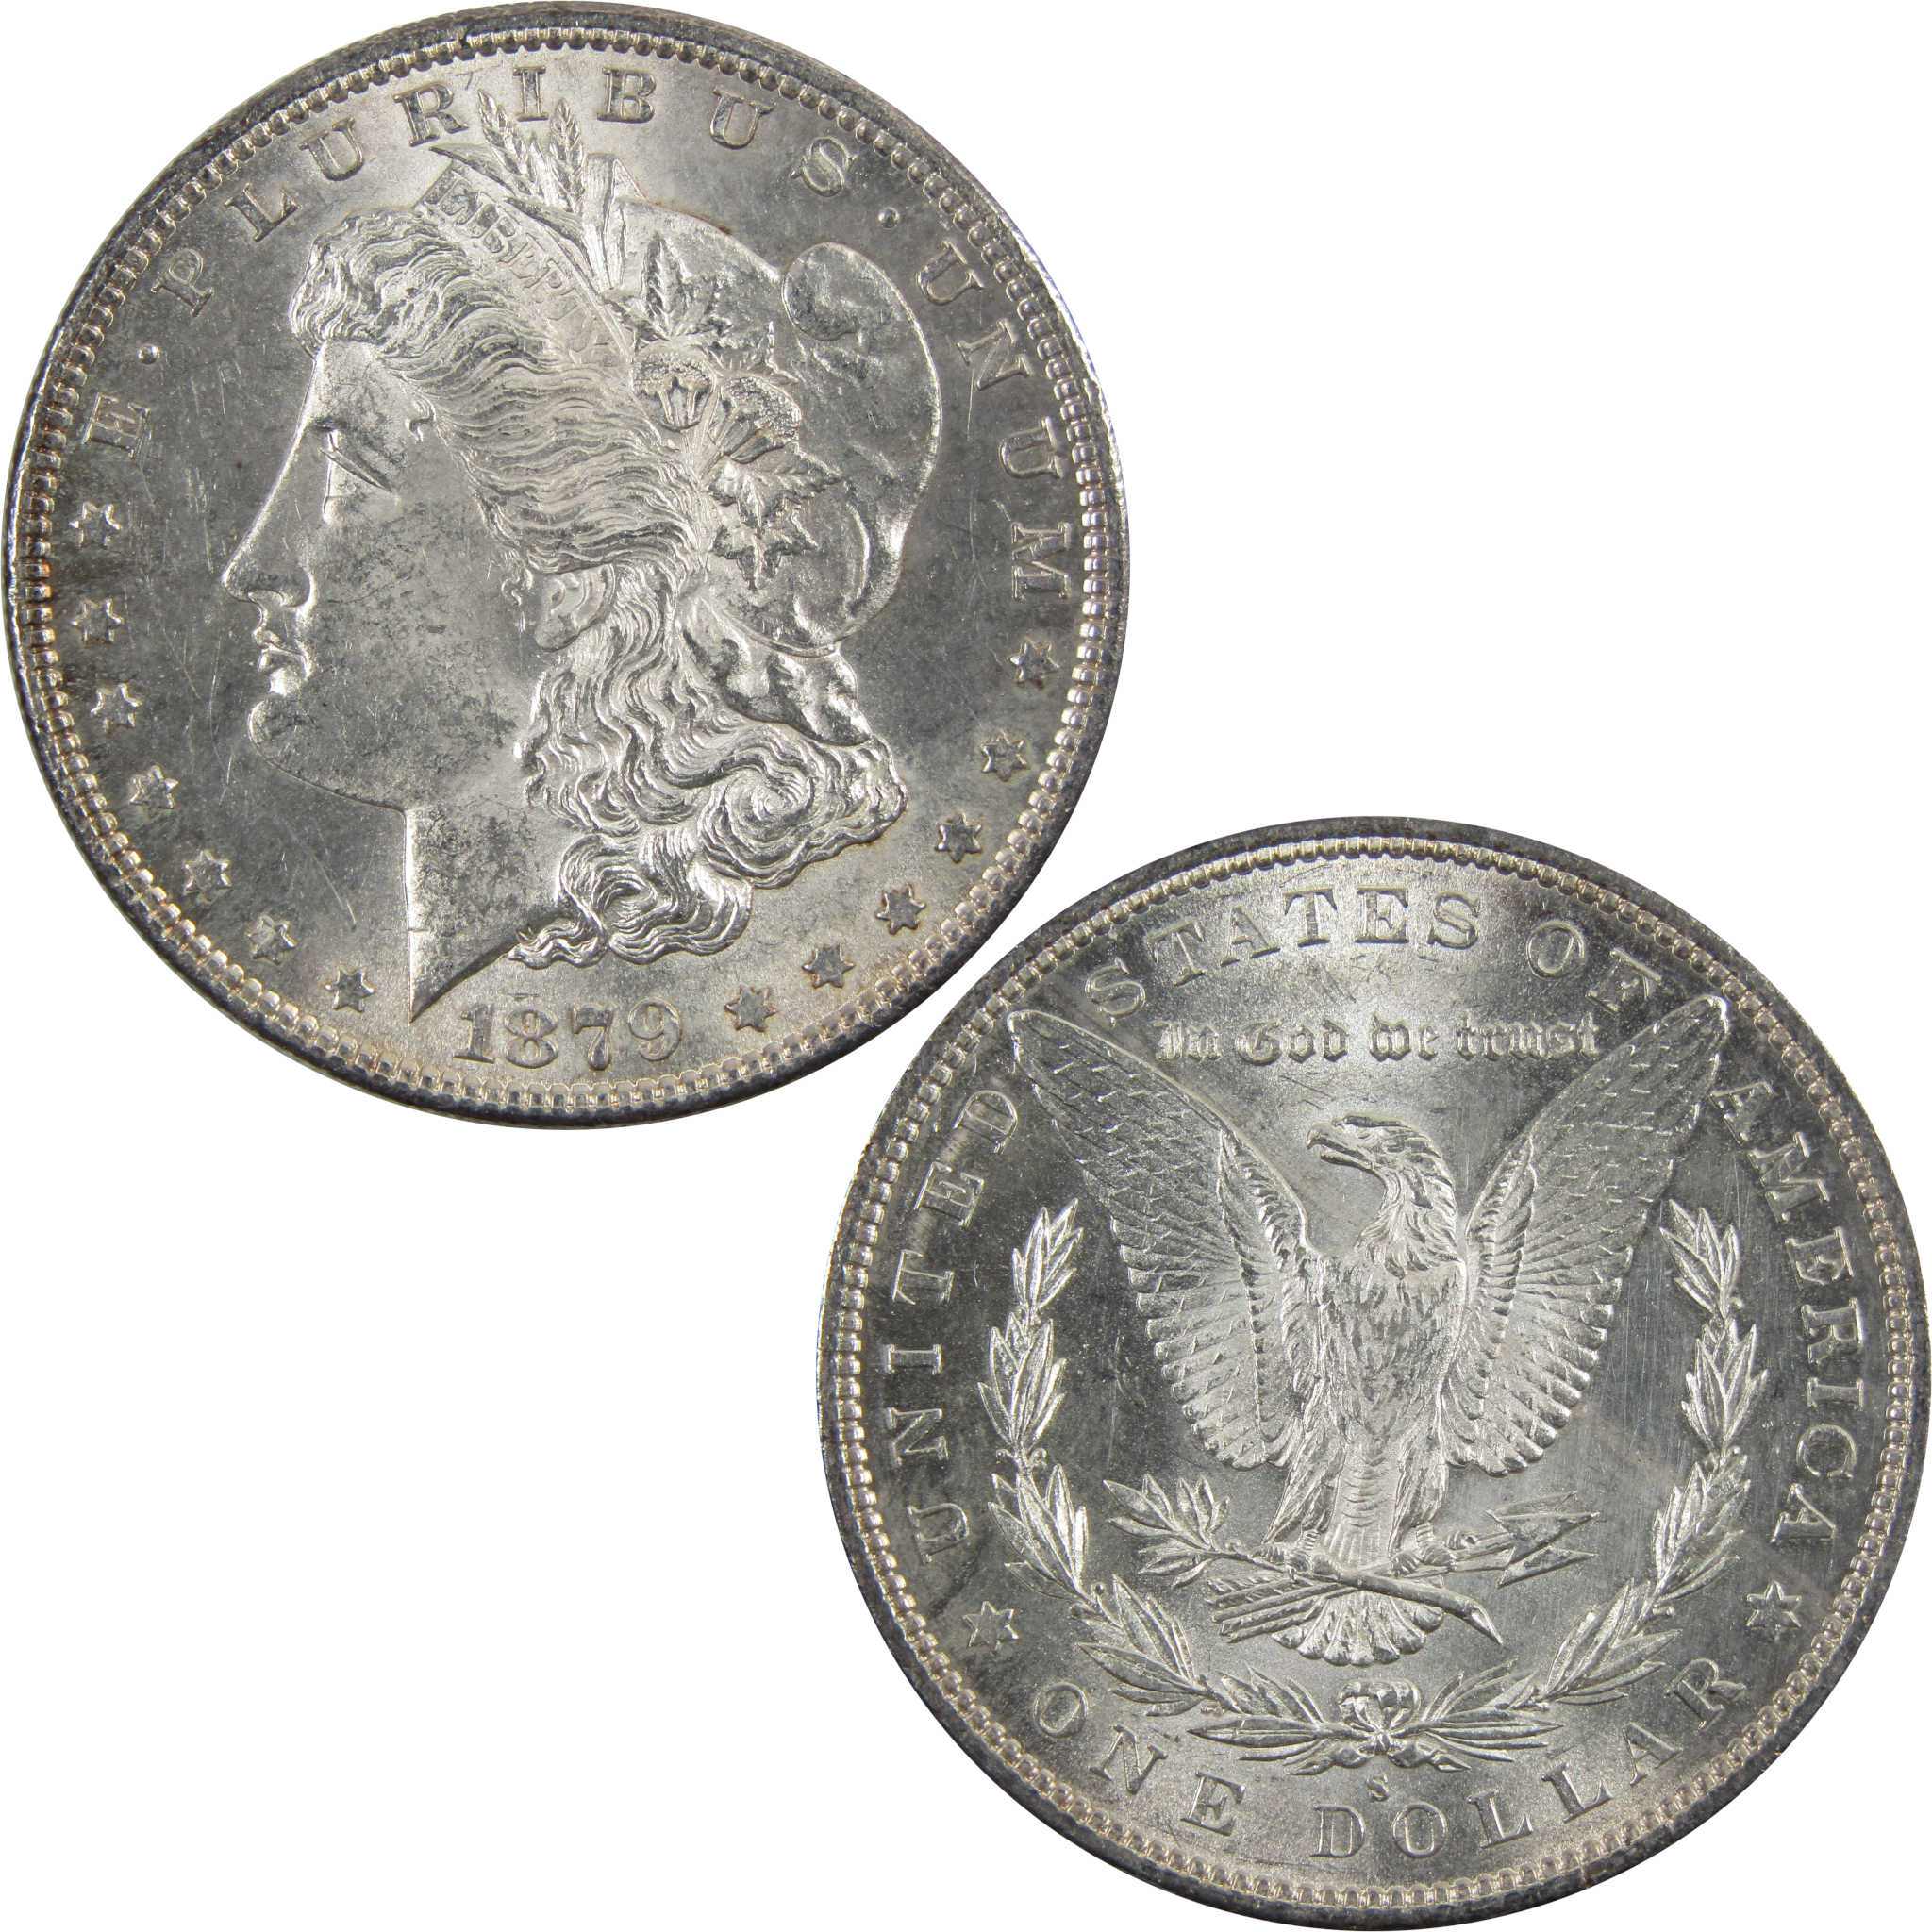 1879 S Morgan Dollar BU Uncirculated 90% Silver $1 Coin SKU:I5188 - Morgan coin - Morgan silver dollar - Morgan silver dollar for sale - Profile Coins &amp; Collectibles